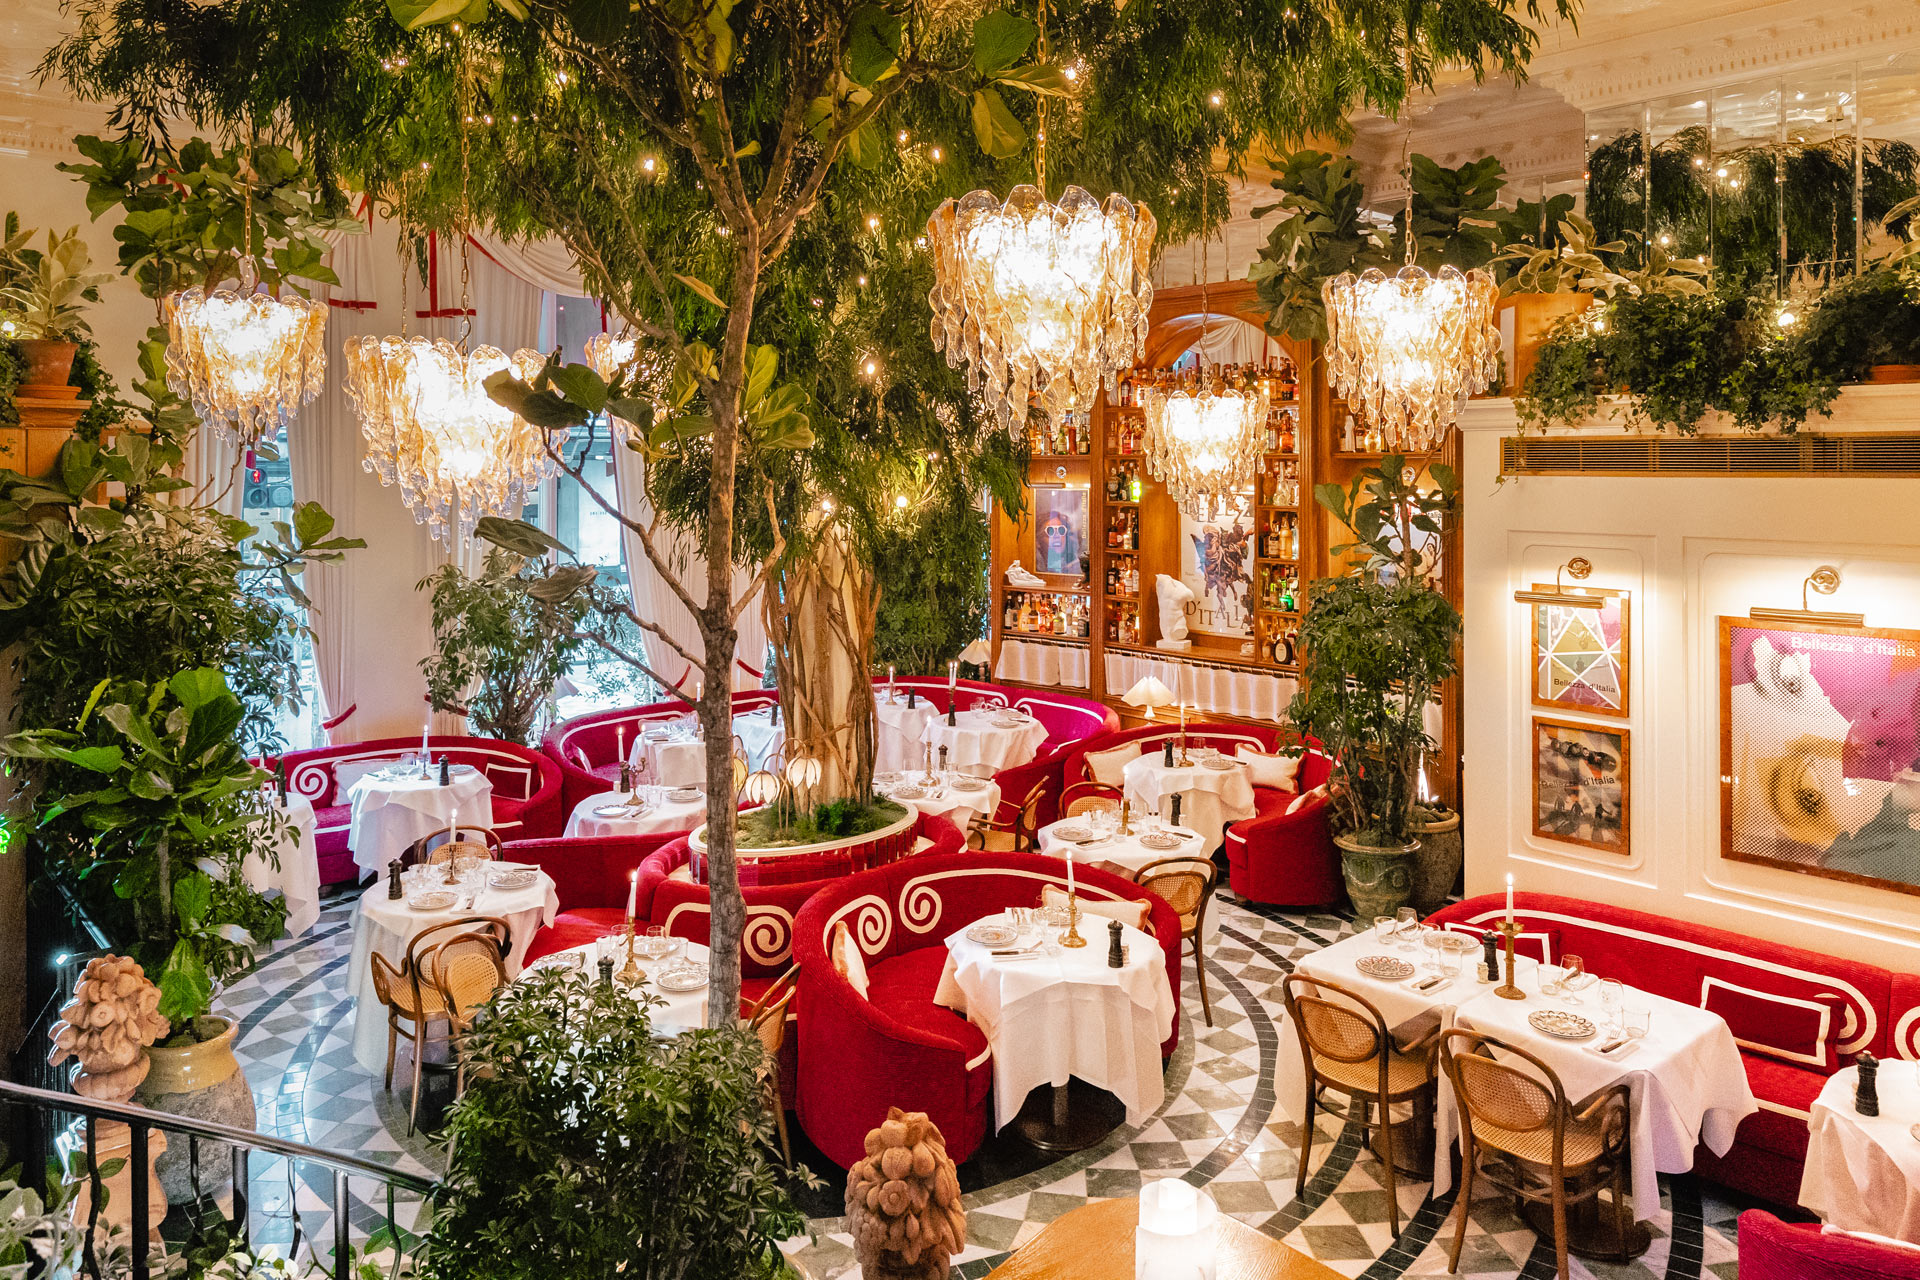 uheldigvis bison Rådgiver 19 of London's Most Instagrammable Restaurants To Visit in 2023